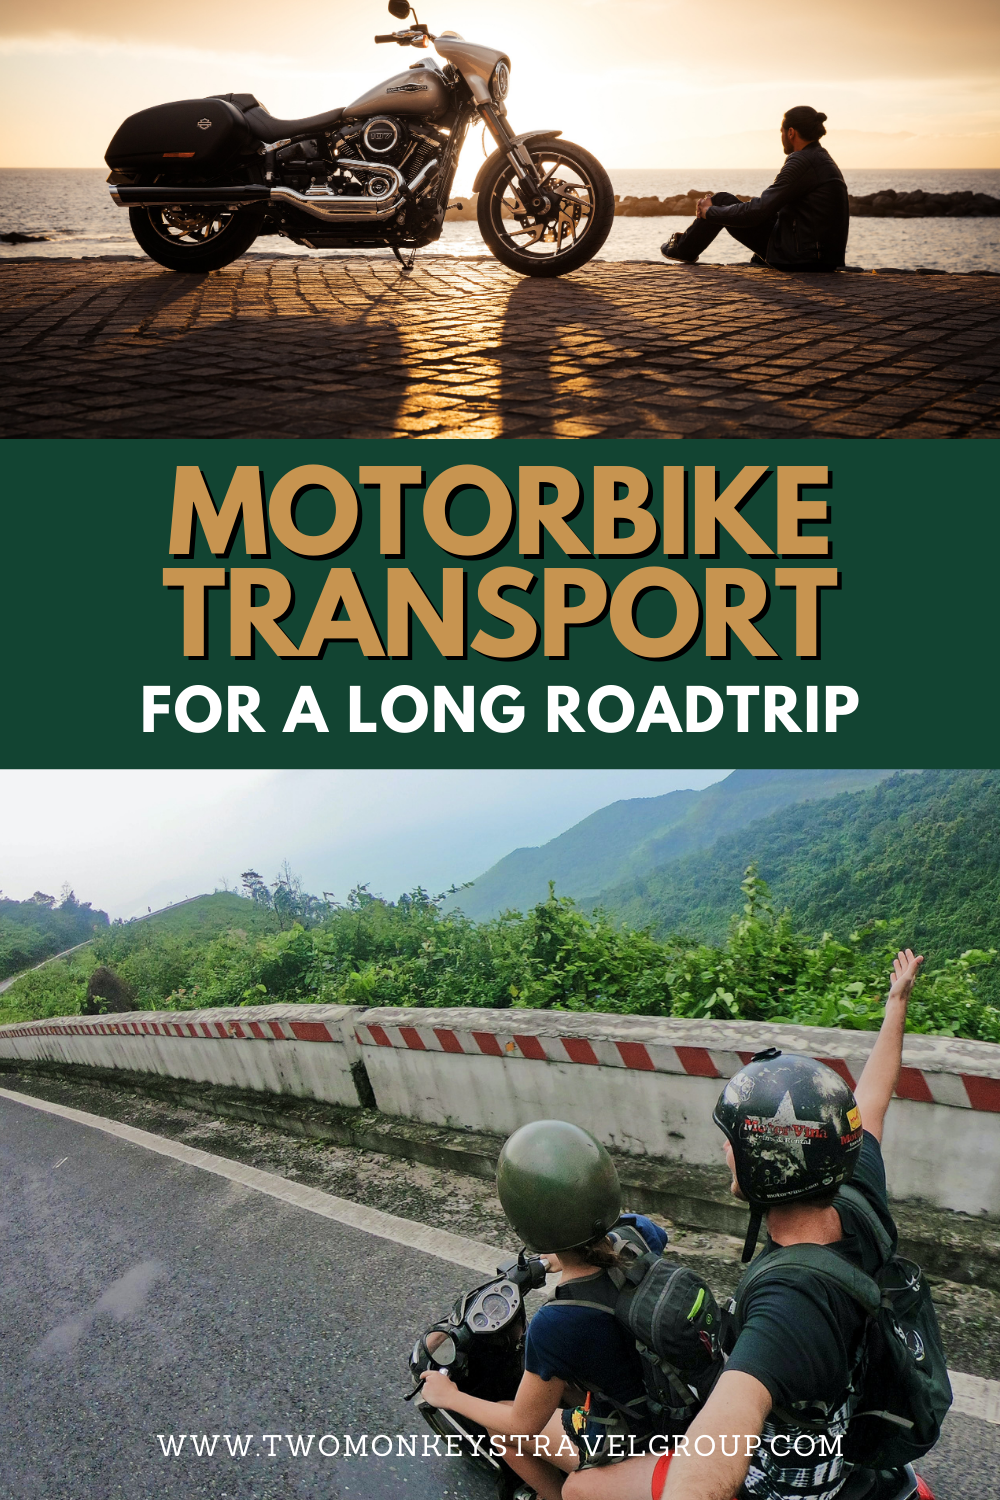 Motorbike Transport For a Long Roadtrip